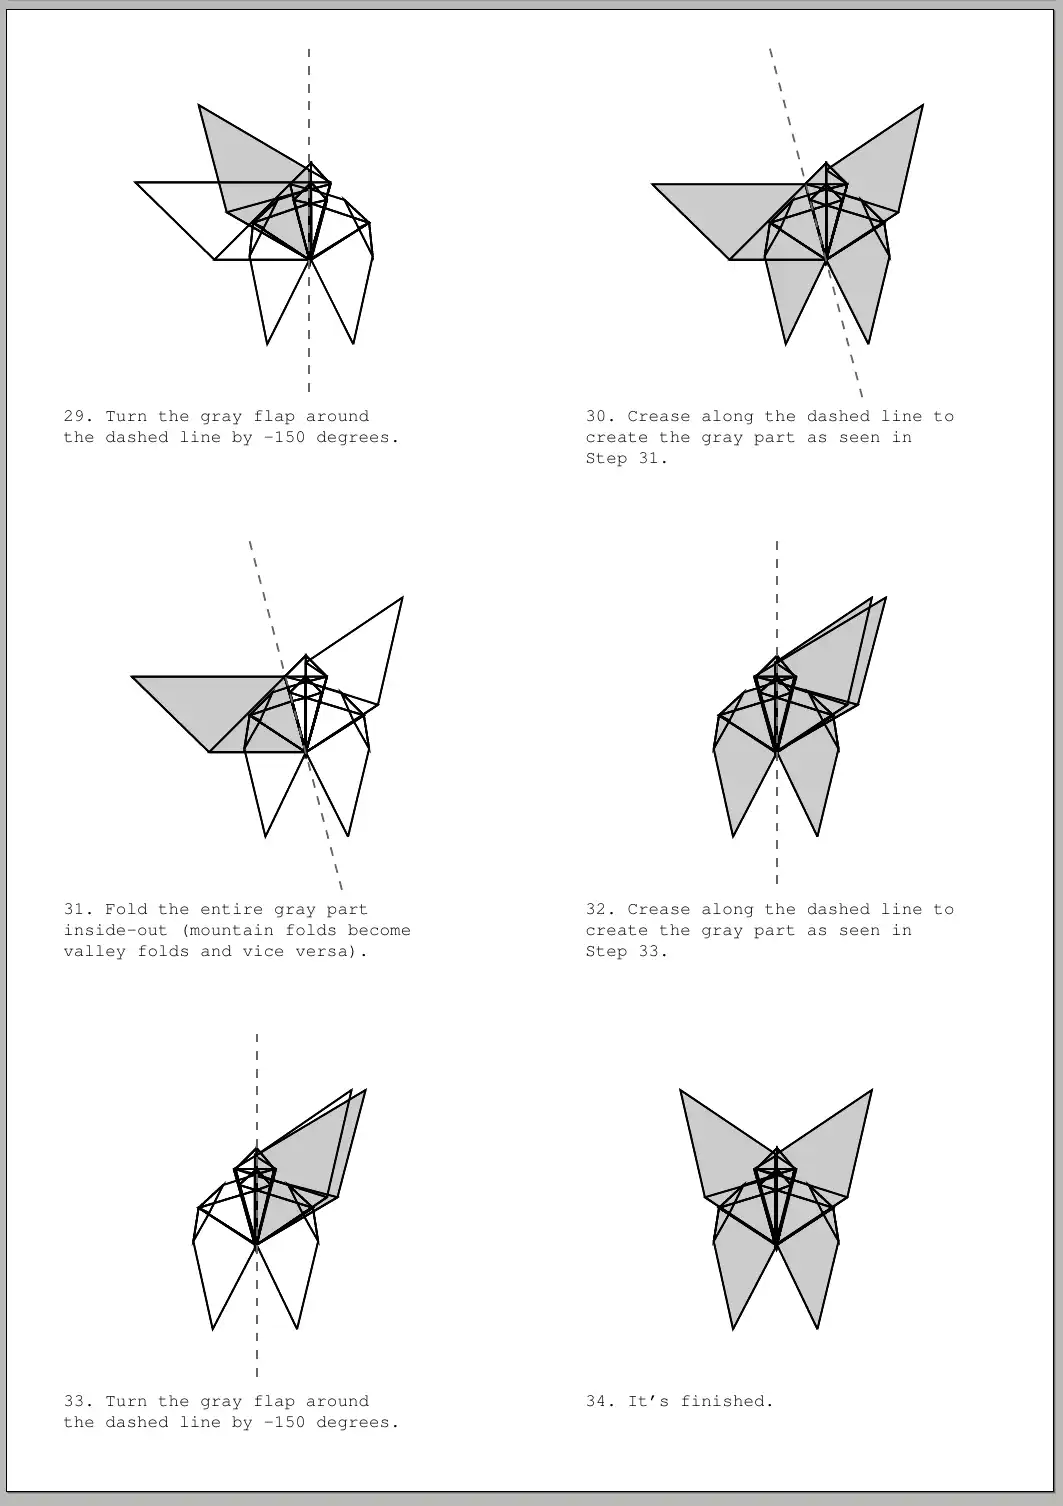 Завантажте веб-інструмент або веб-програму Origami Editor 3D